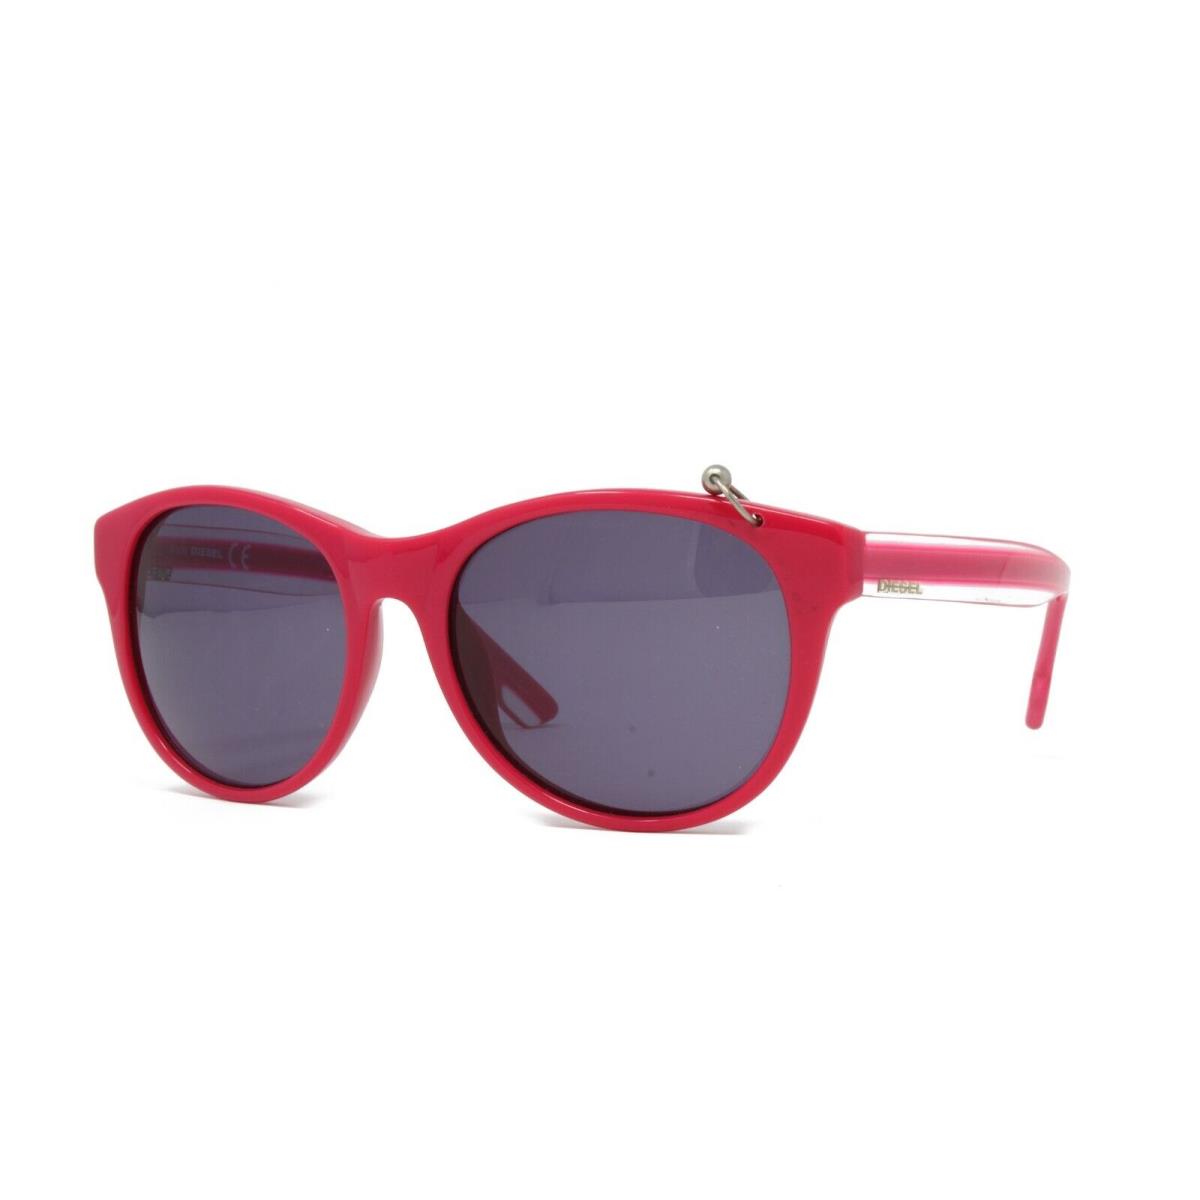 Diesel Women`s Sunglasses DL0049 75A Pink 55mm Grey Lens